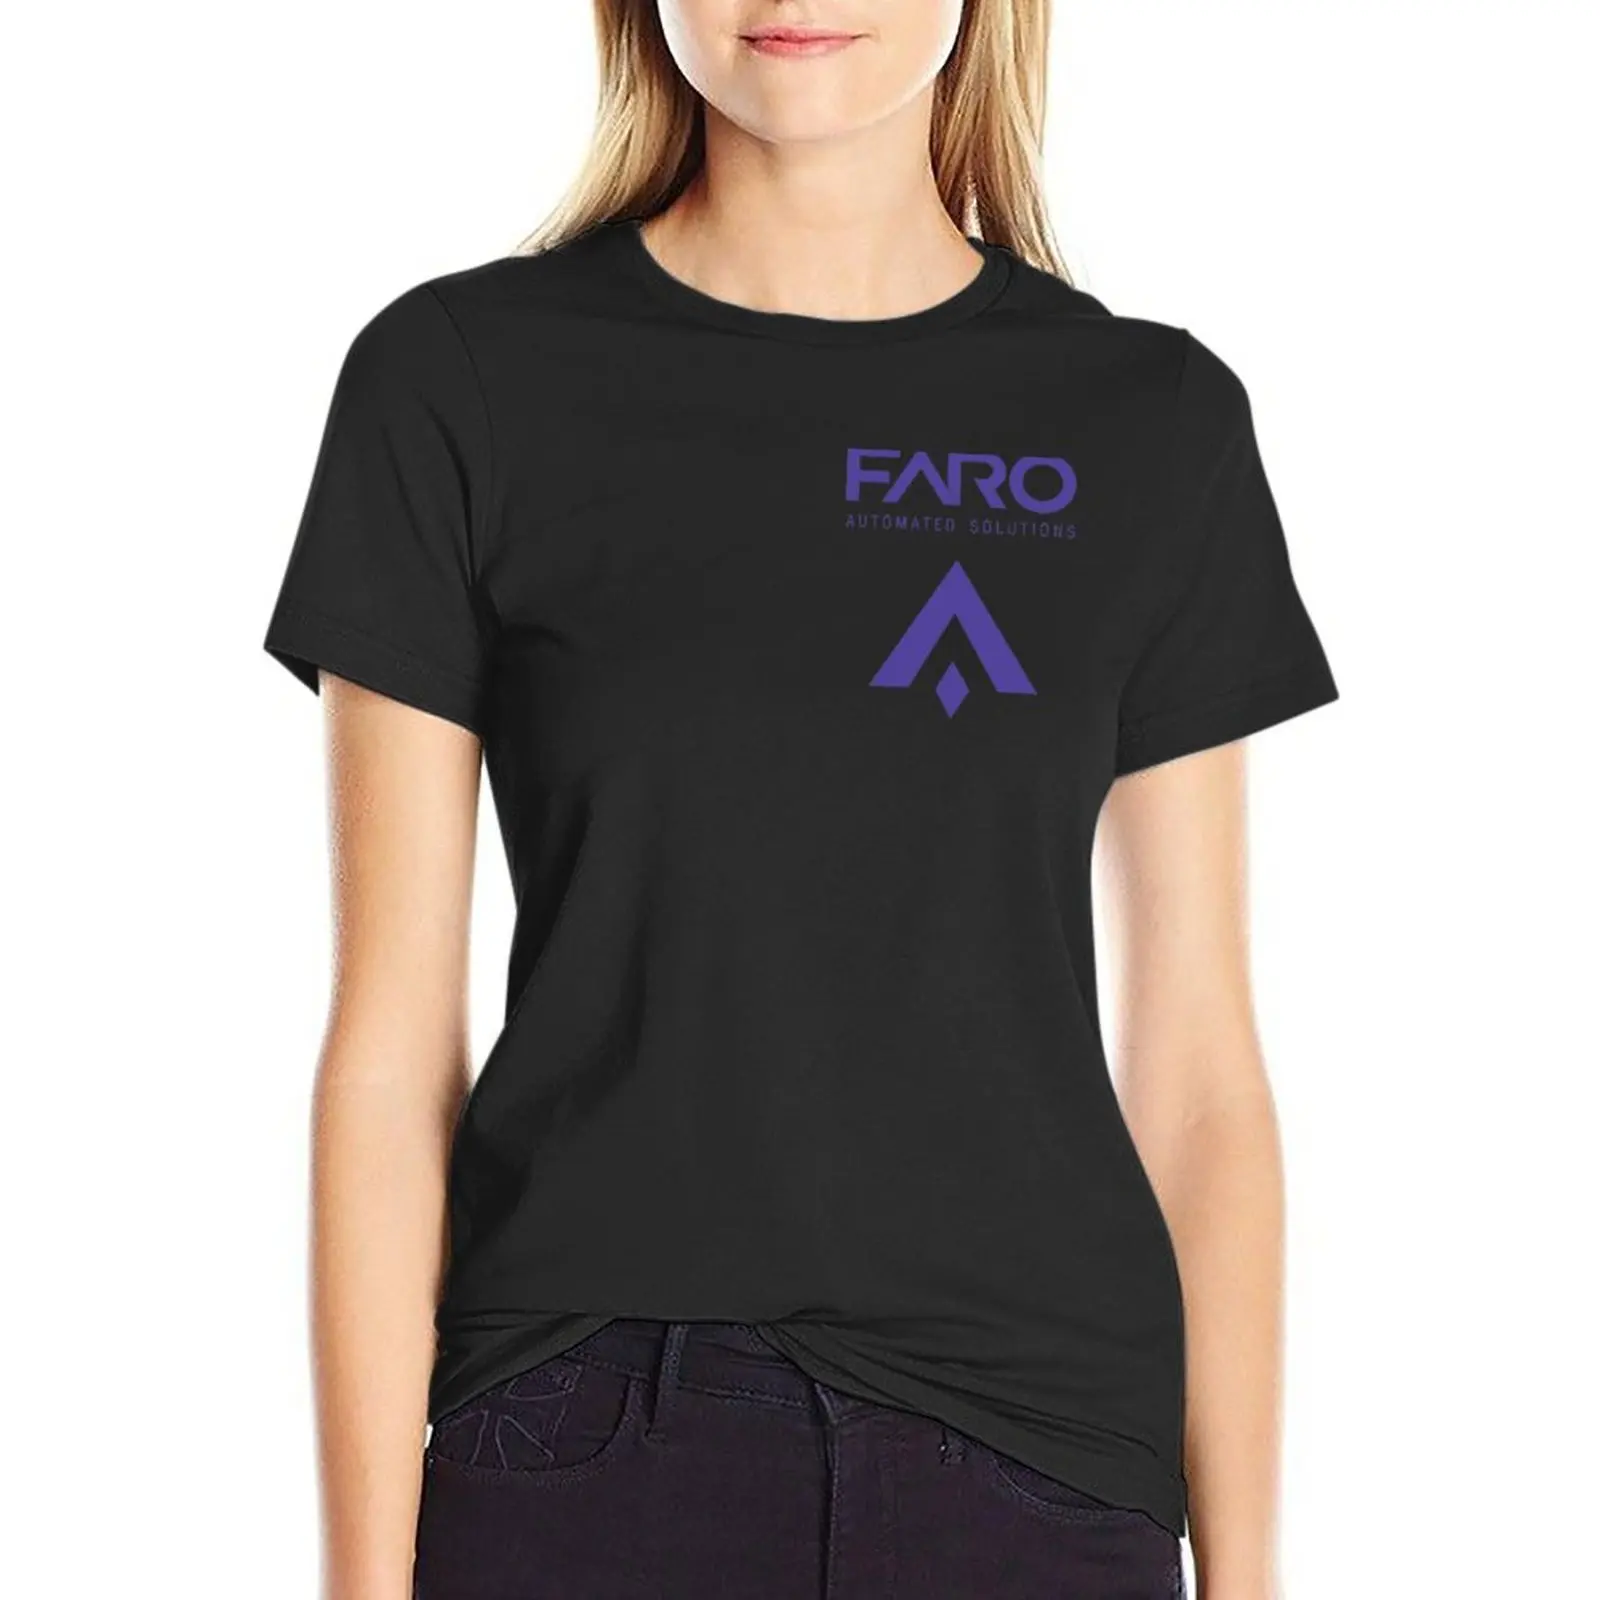 Футболка FARO Automated Solutions, короткая футболка, женская футболка